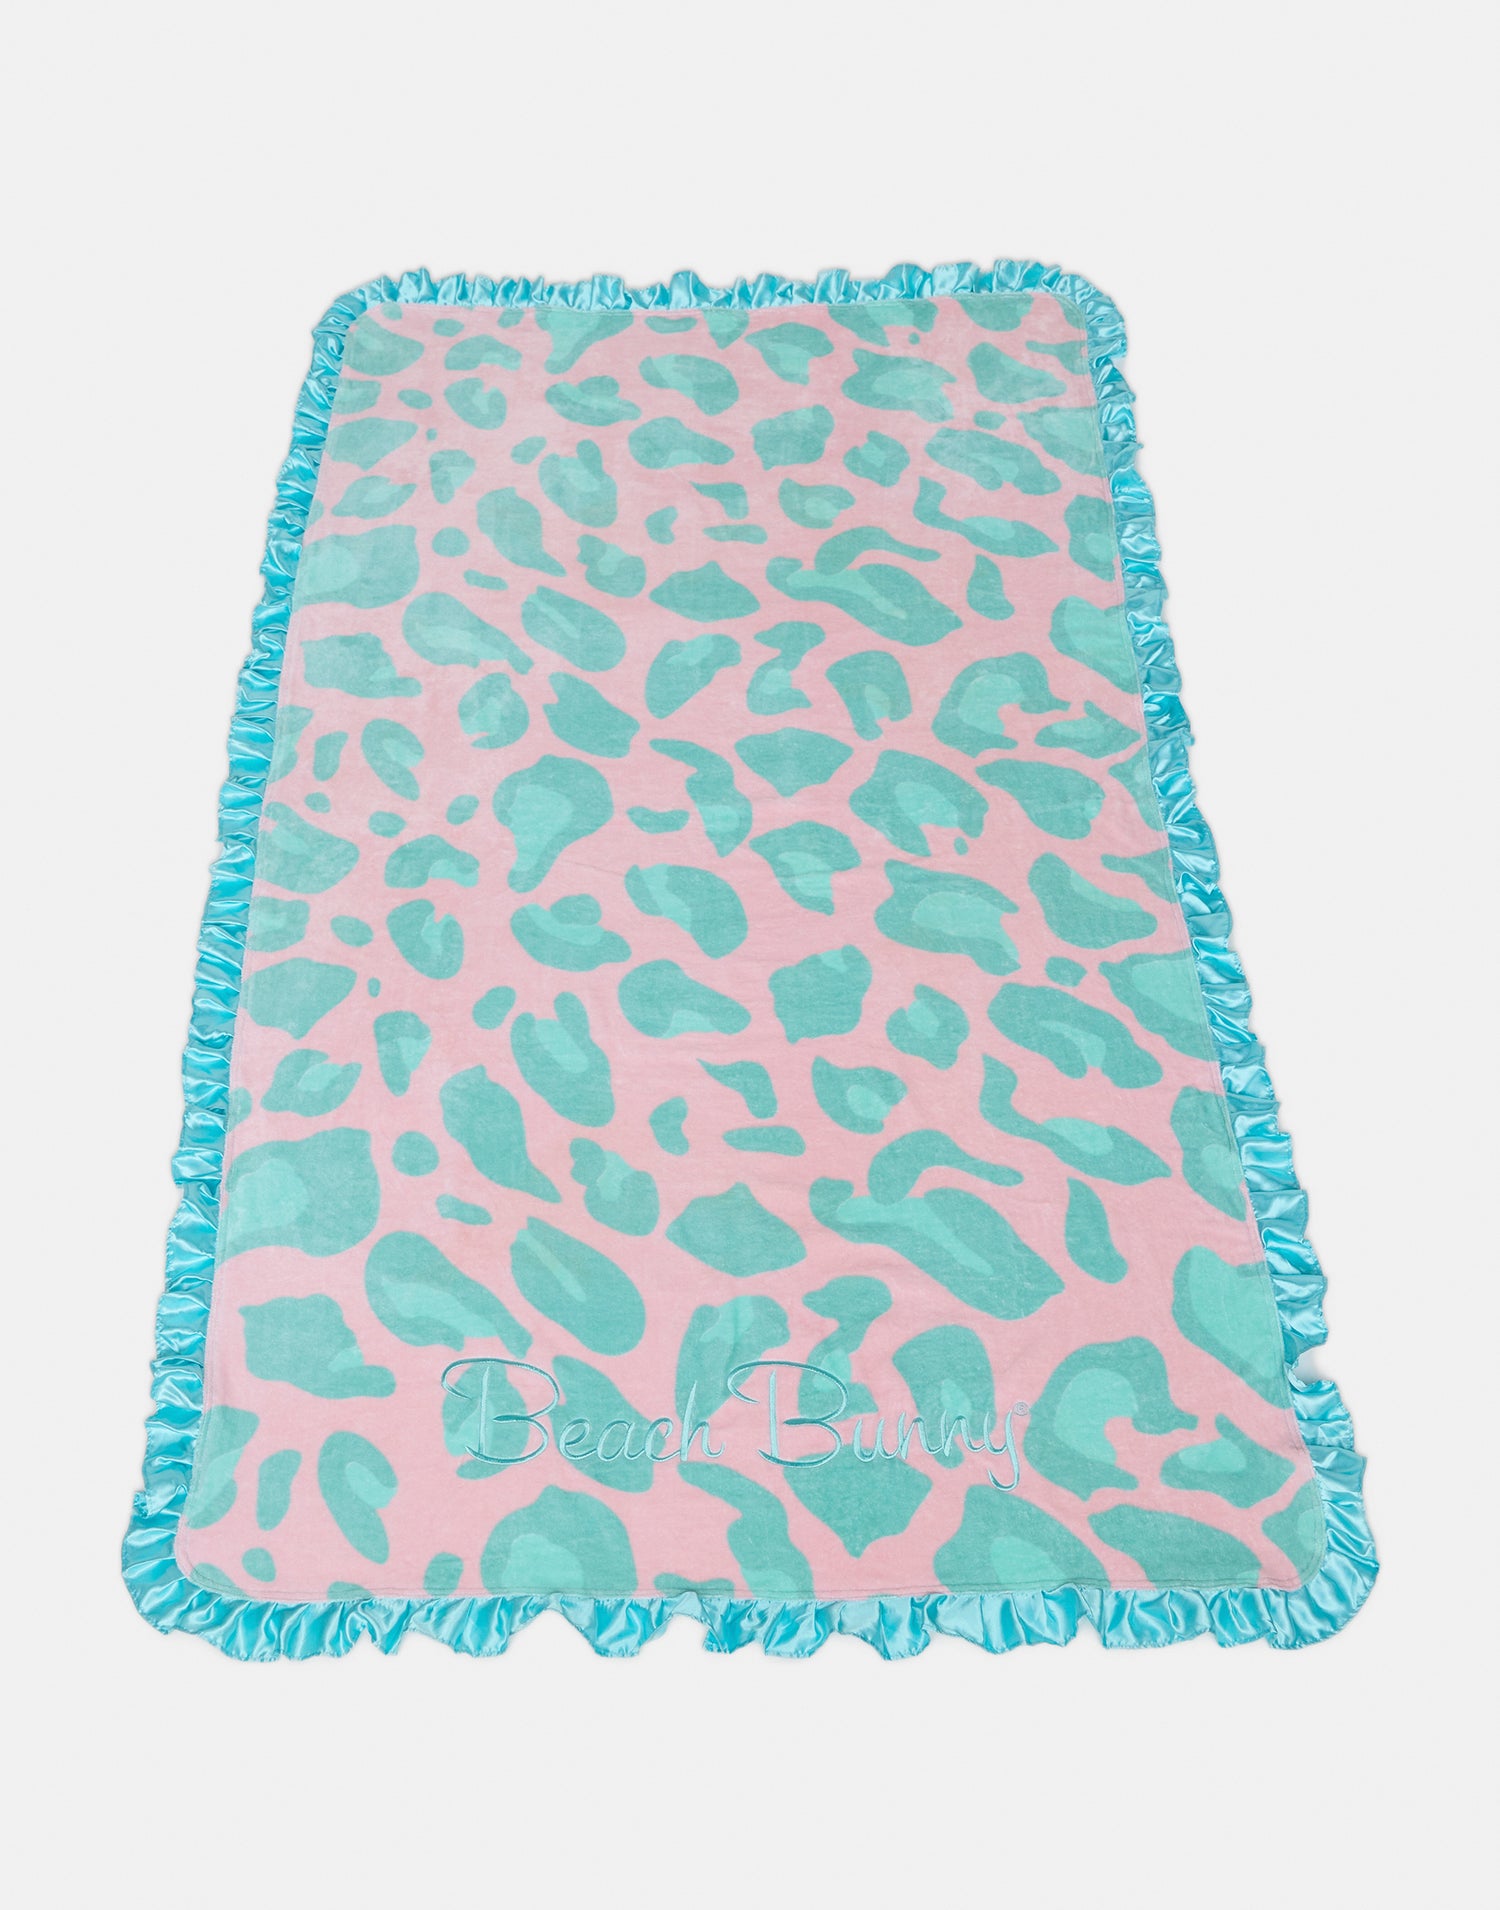 Cherry Blossom Aqua Leopard Beach Towel with Aqua Ruffle Trim - Product View